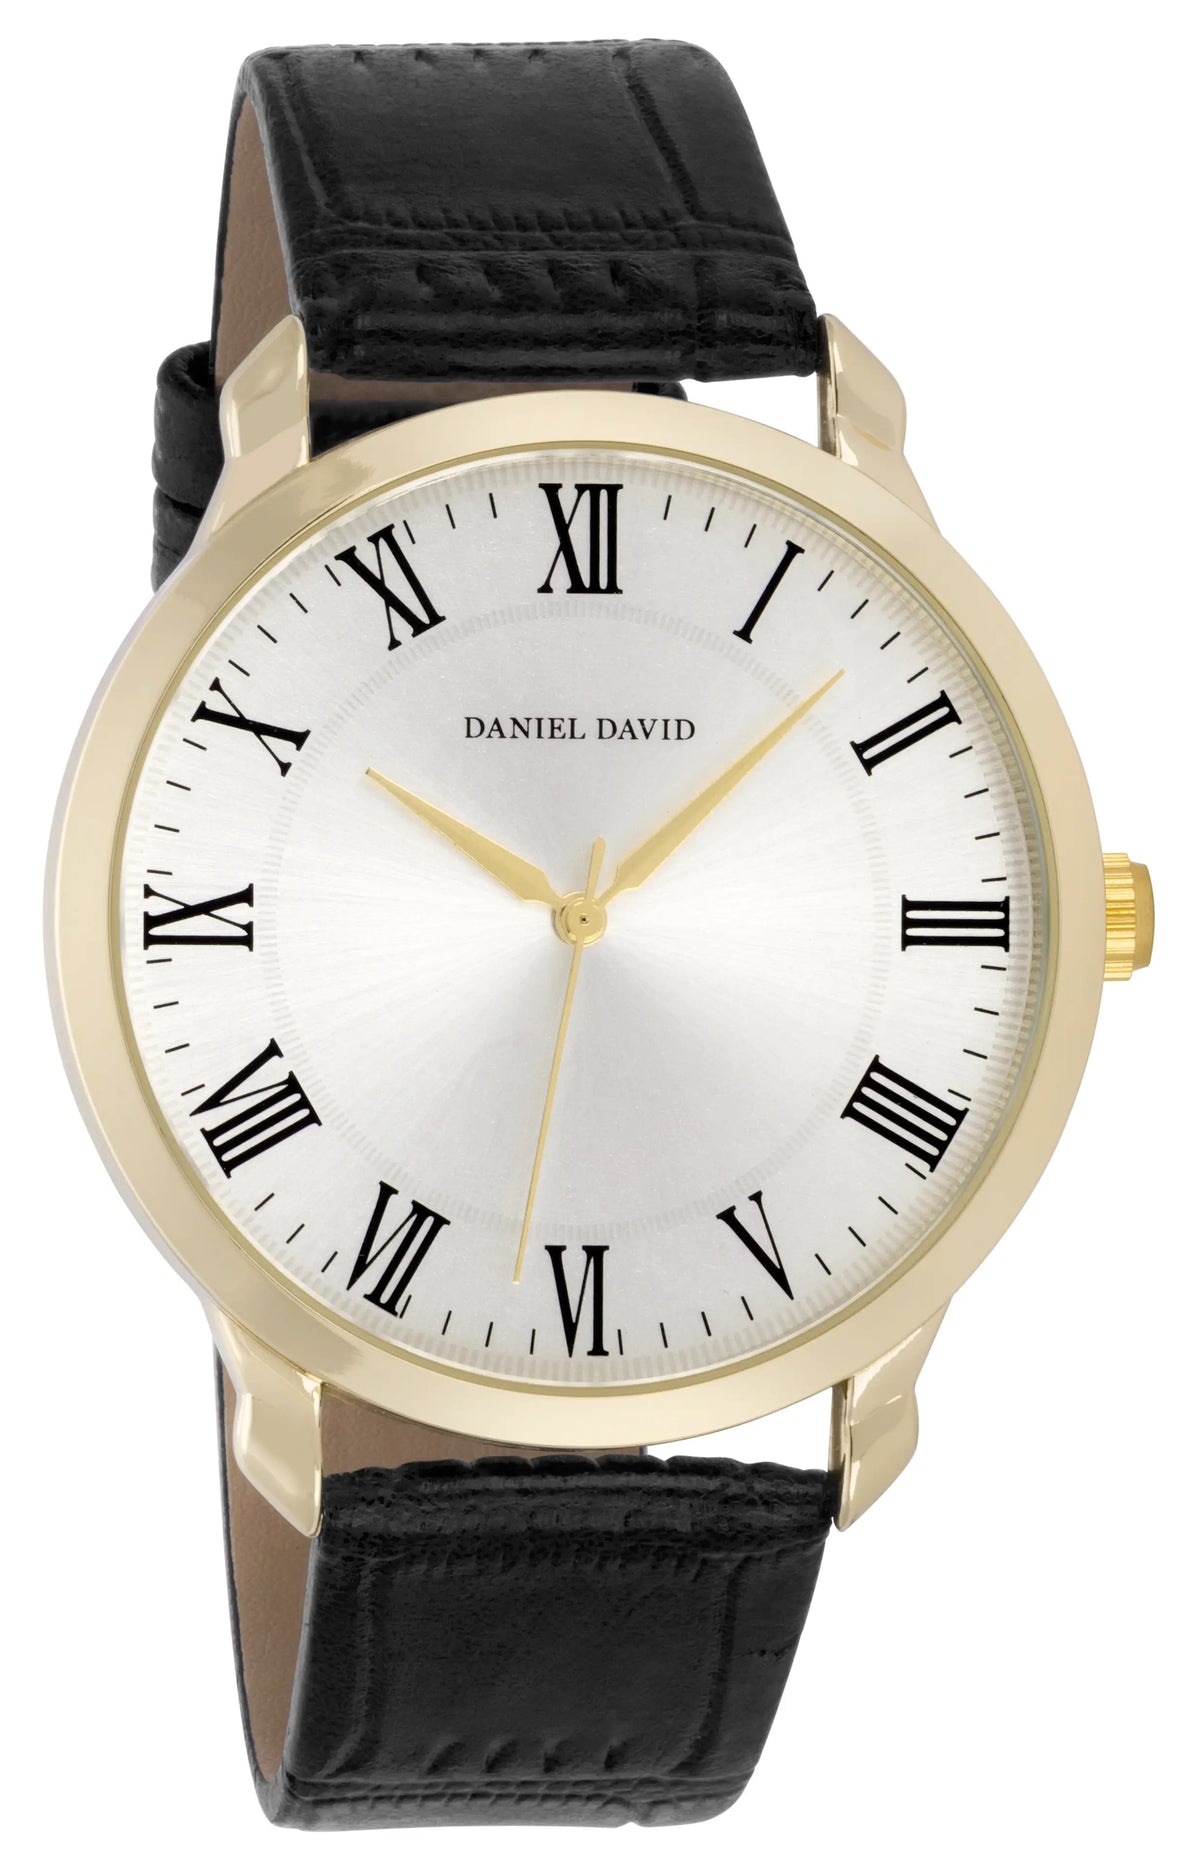 Marciano - Daniel David, Roman Numeral White Display Men's Analog Watch, Gold Bevel - Black